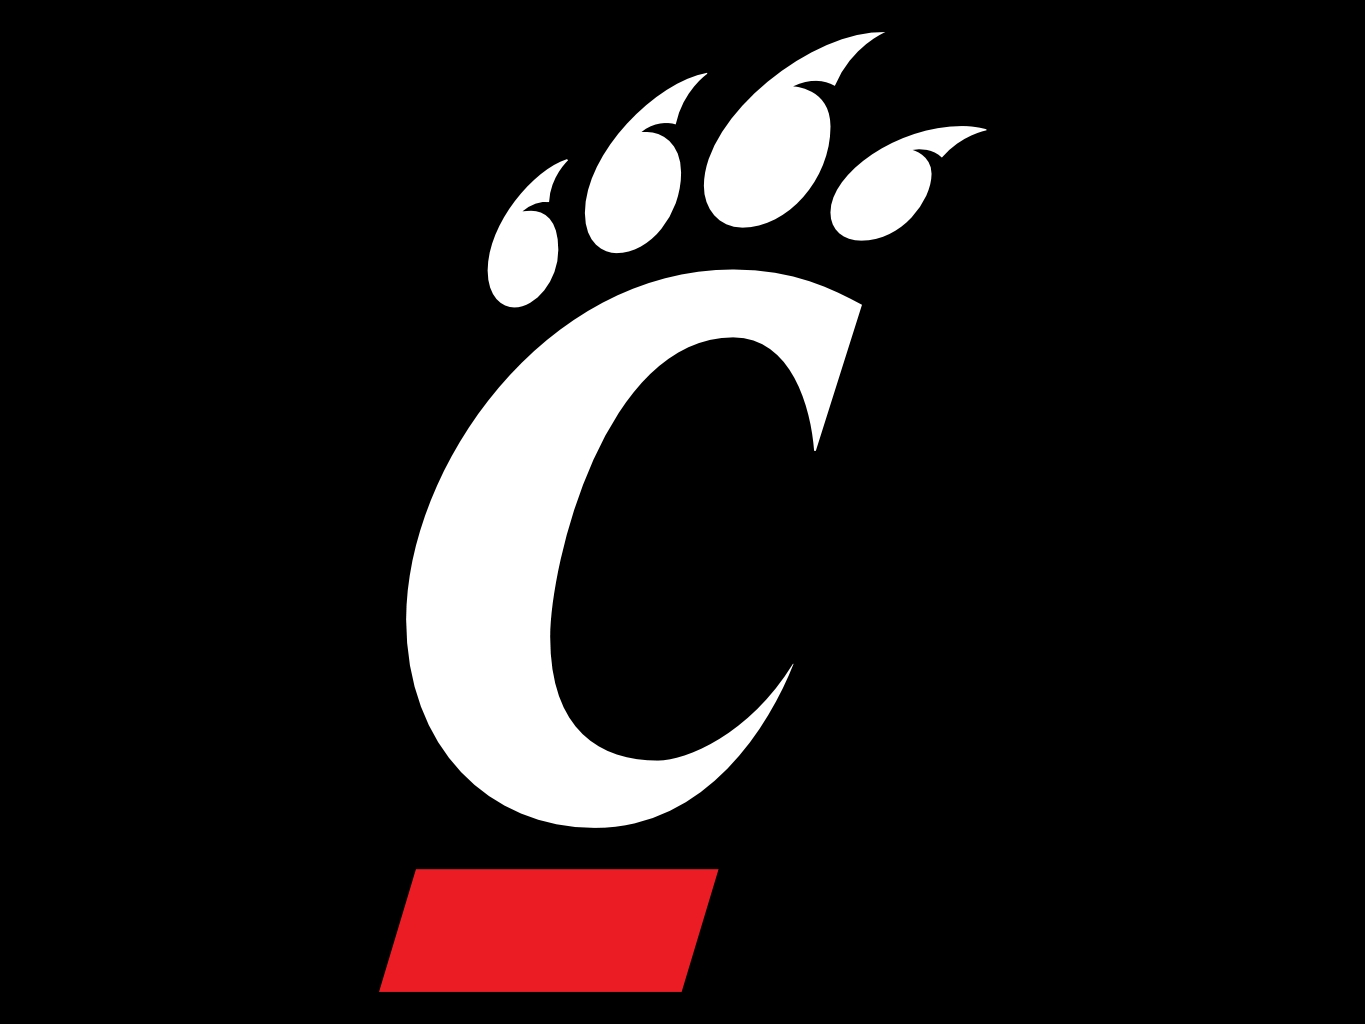 Cincinnati Bearcats football - Wikipedia